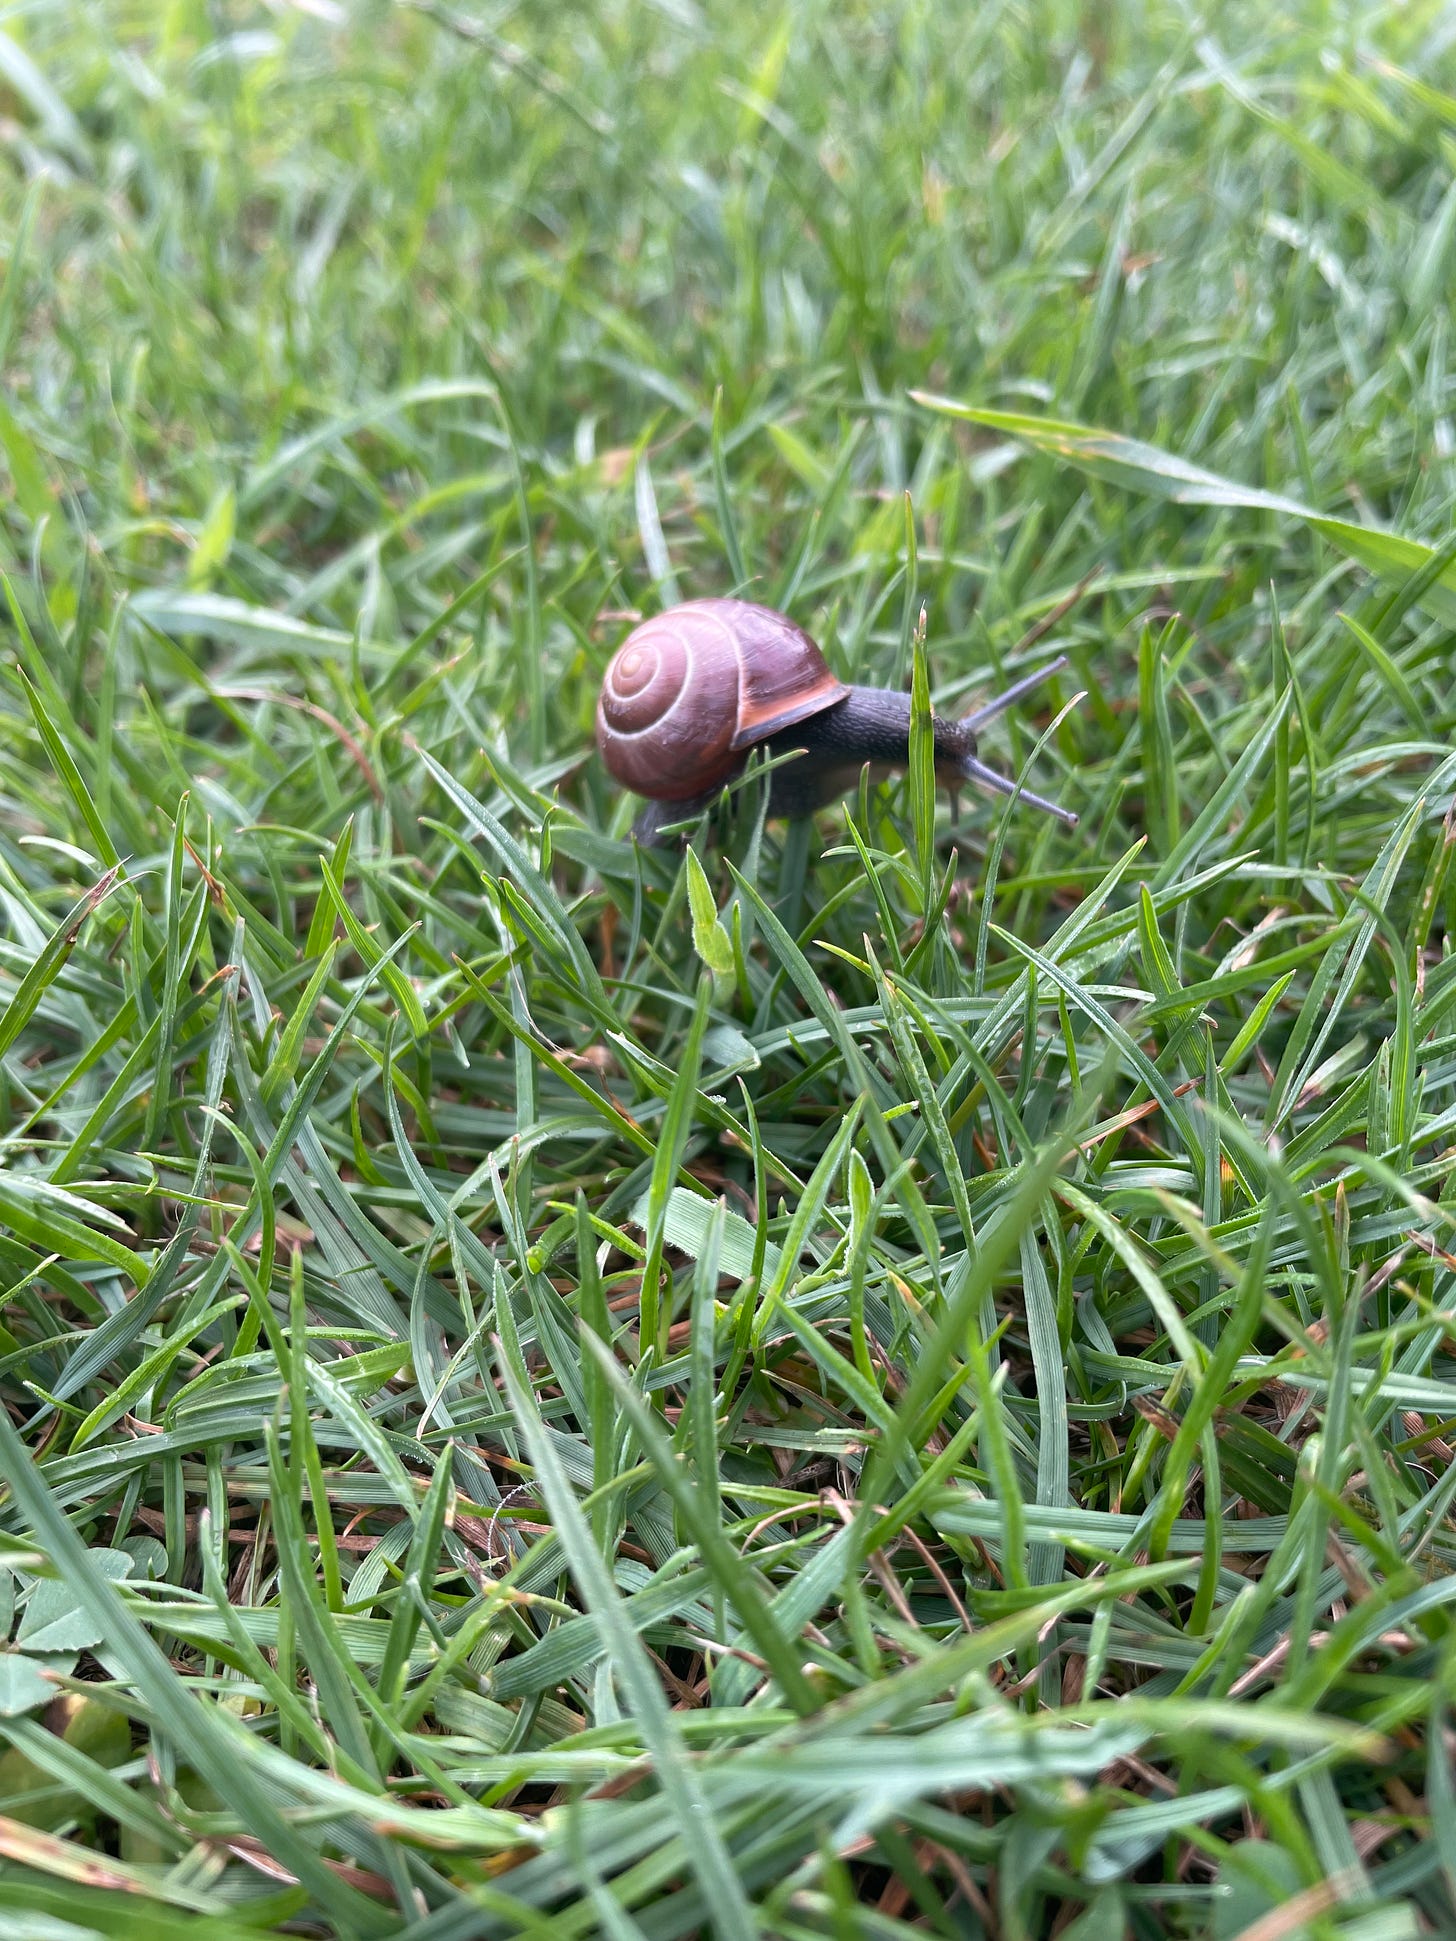 a little snail in the grass